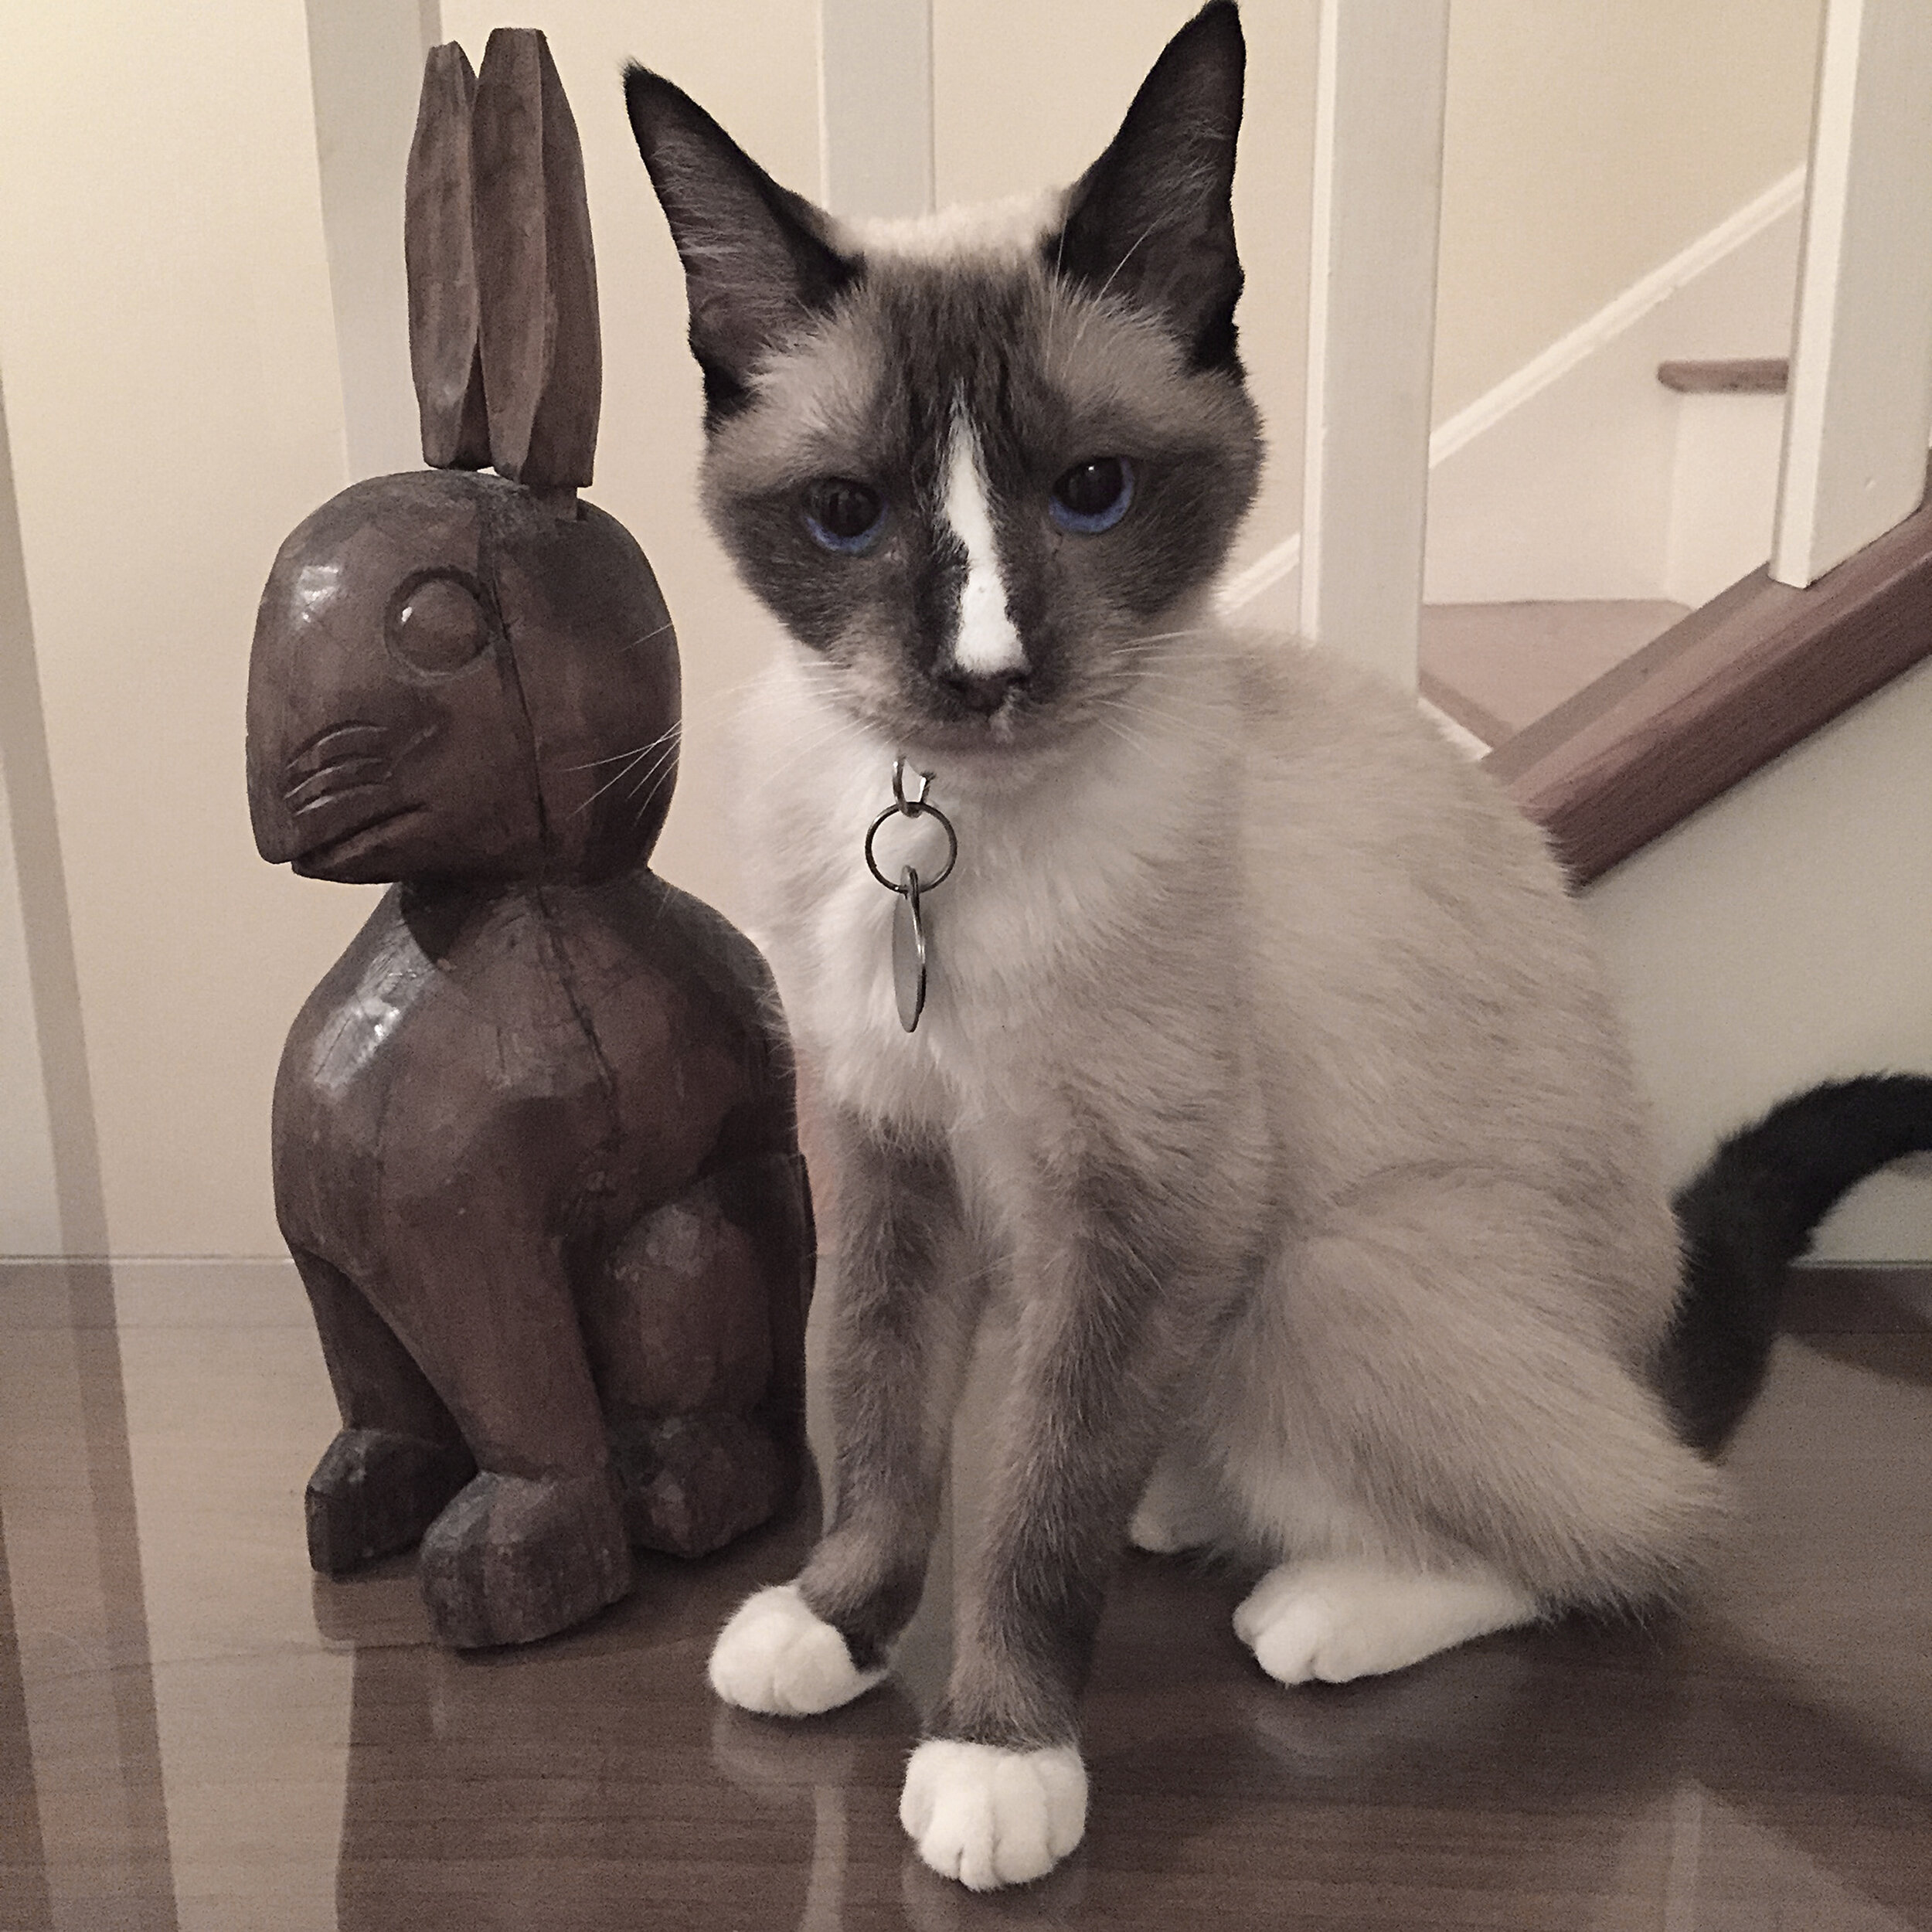  Bella with Rabbit, 2015 